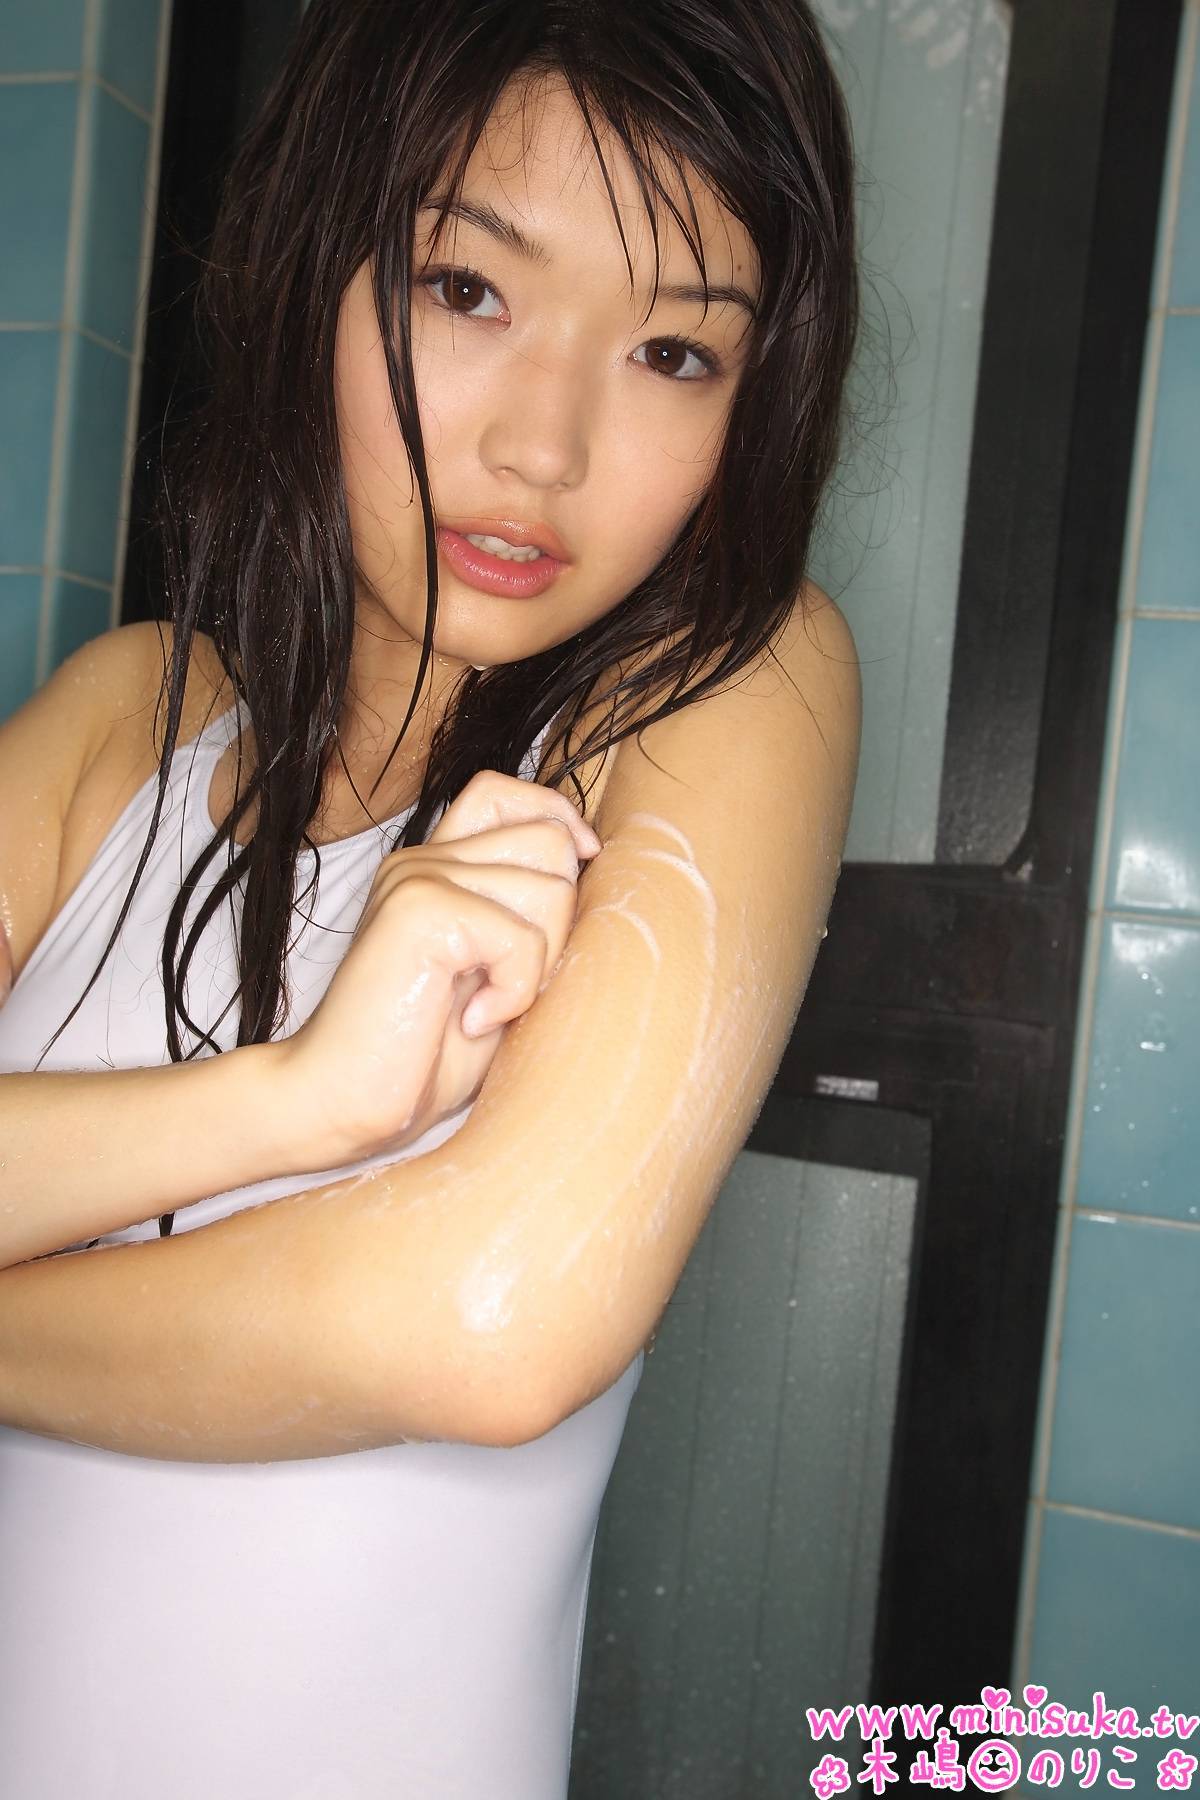 KIJIMA Noriko (2) Minisuka. TV Japanese high school girl